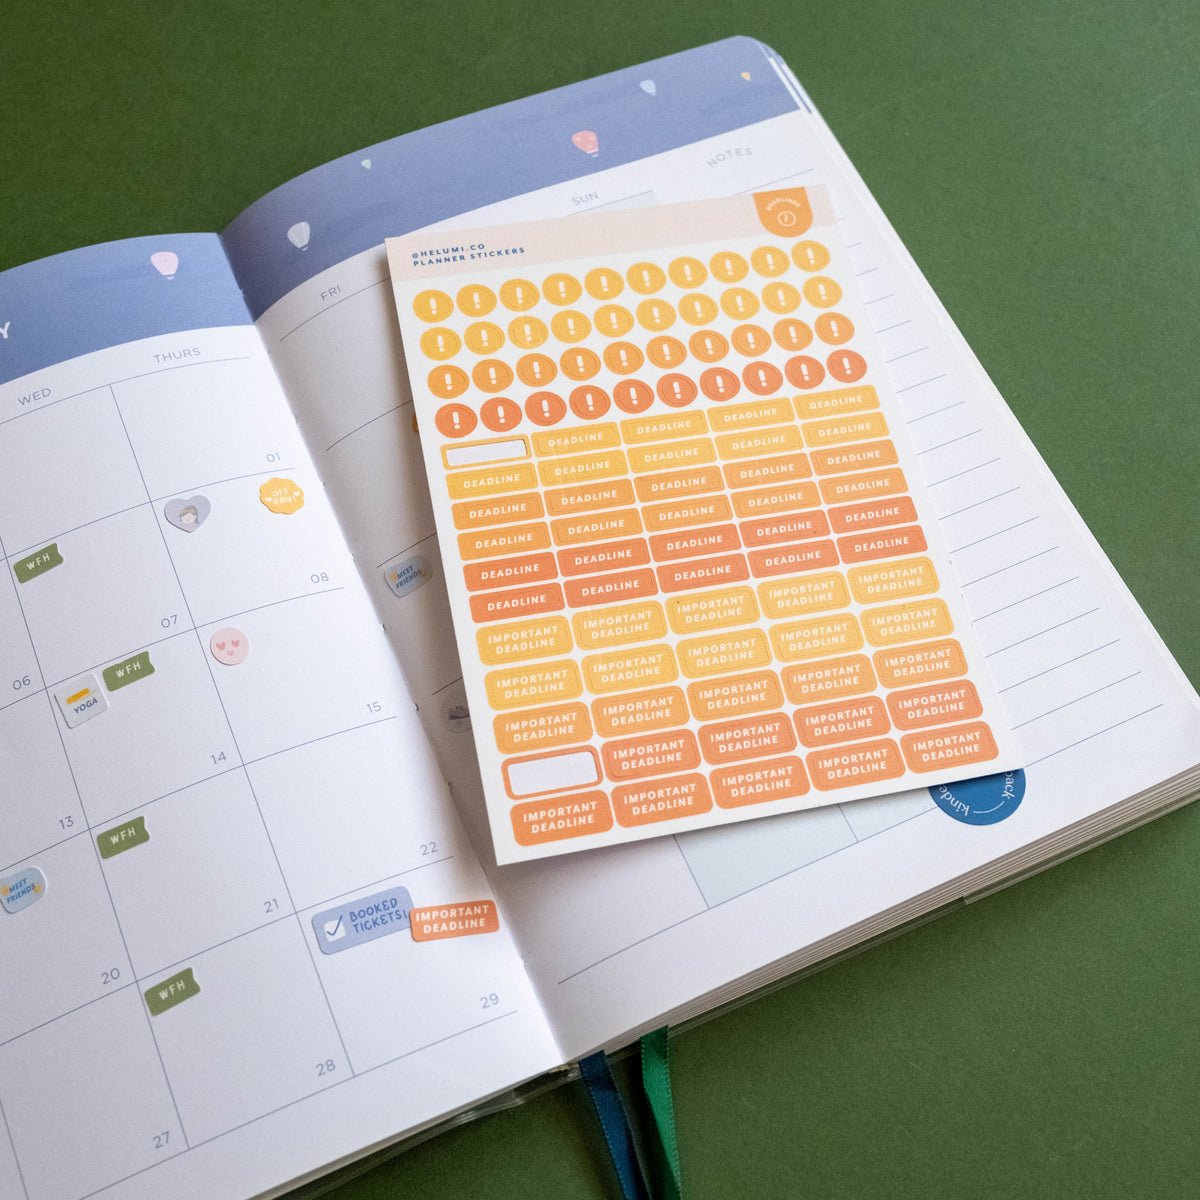 Deadlines (Work/School) - Colour-coded Planner Sticker Sheet